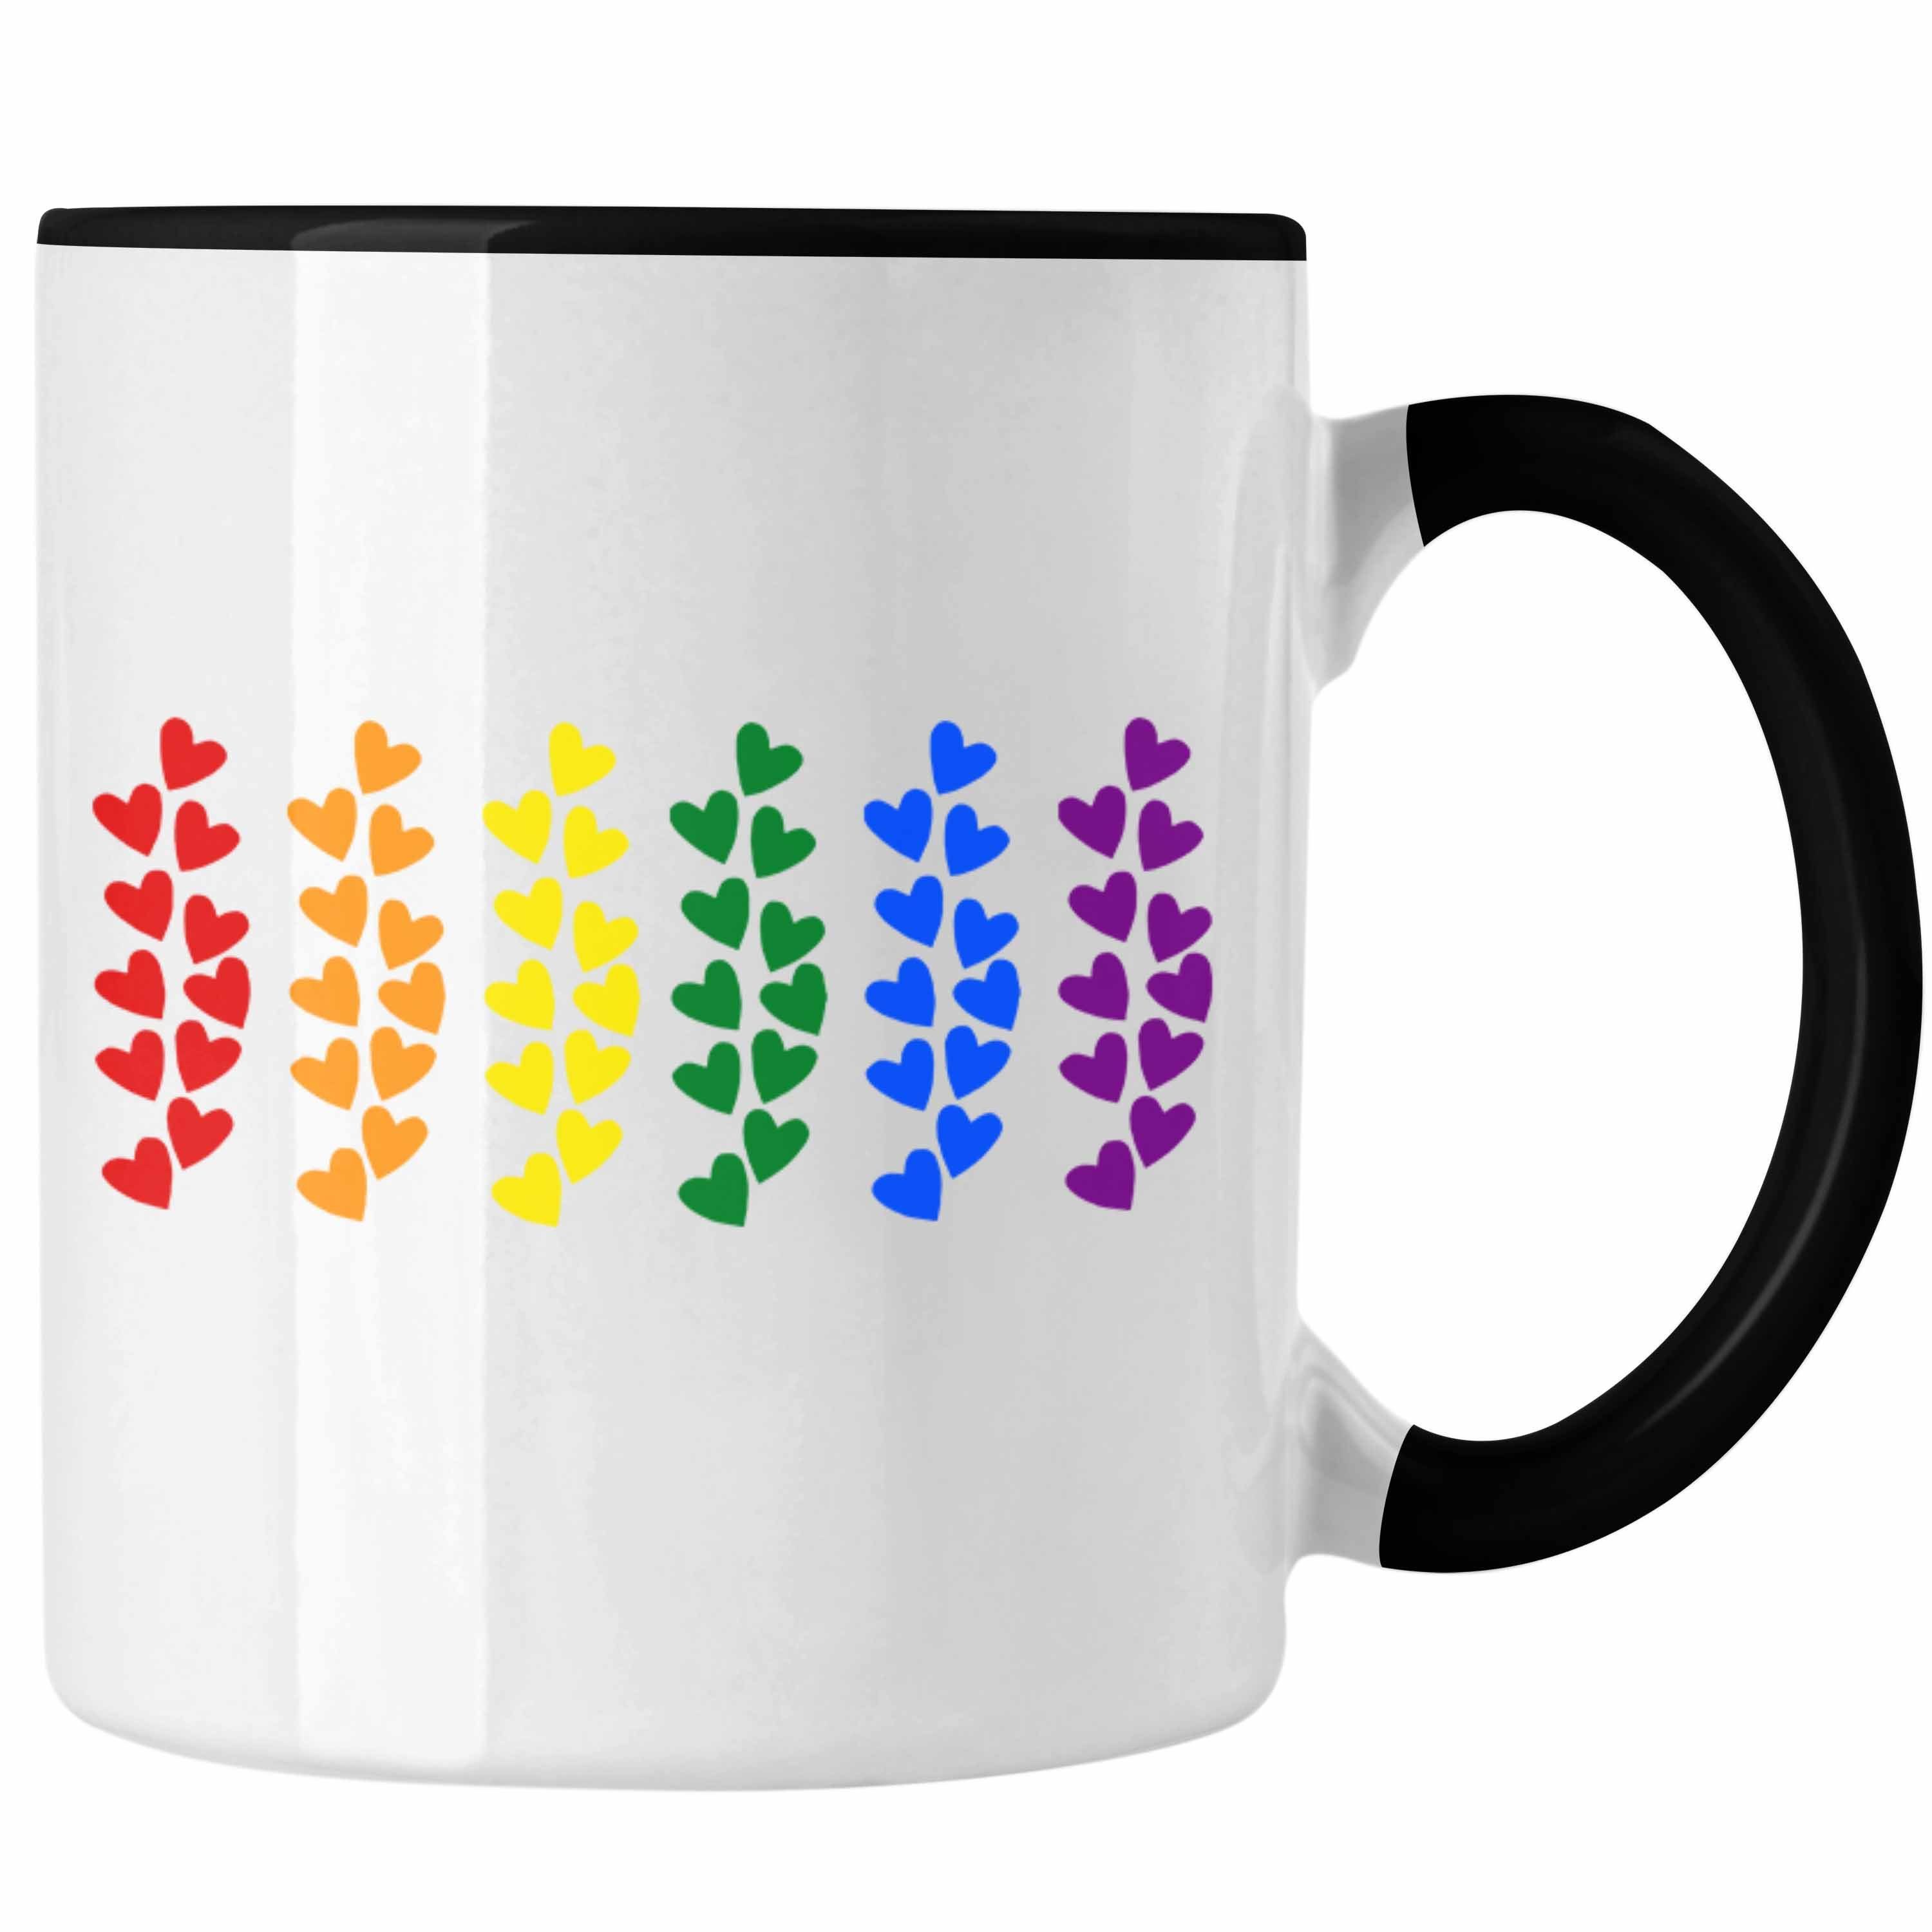 Trendation Tasse Trendation - Regenbogen Tasse Geschenk LGBT Schwule Lesben Transgender Grafik Pride Herzen Flagge Schwarz